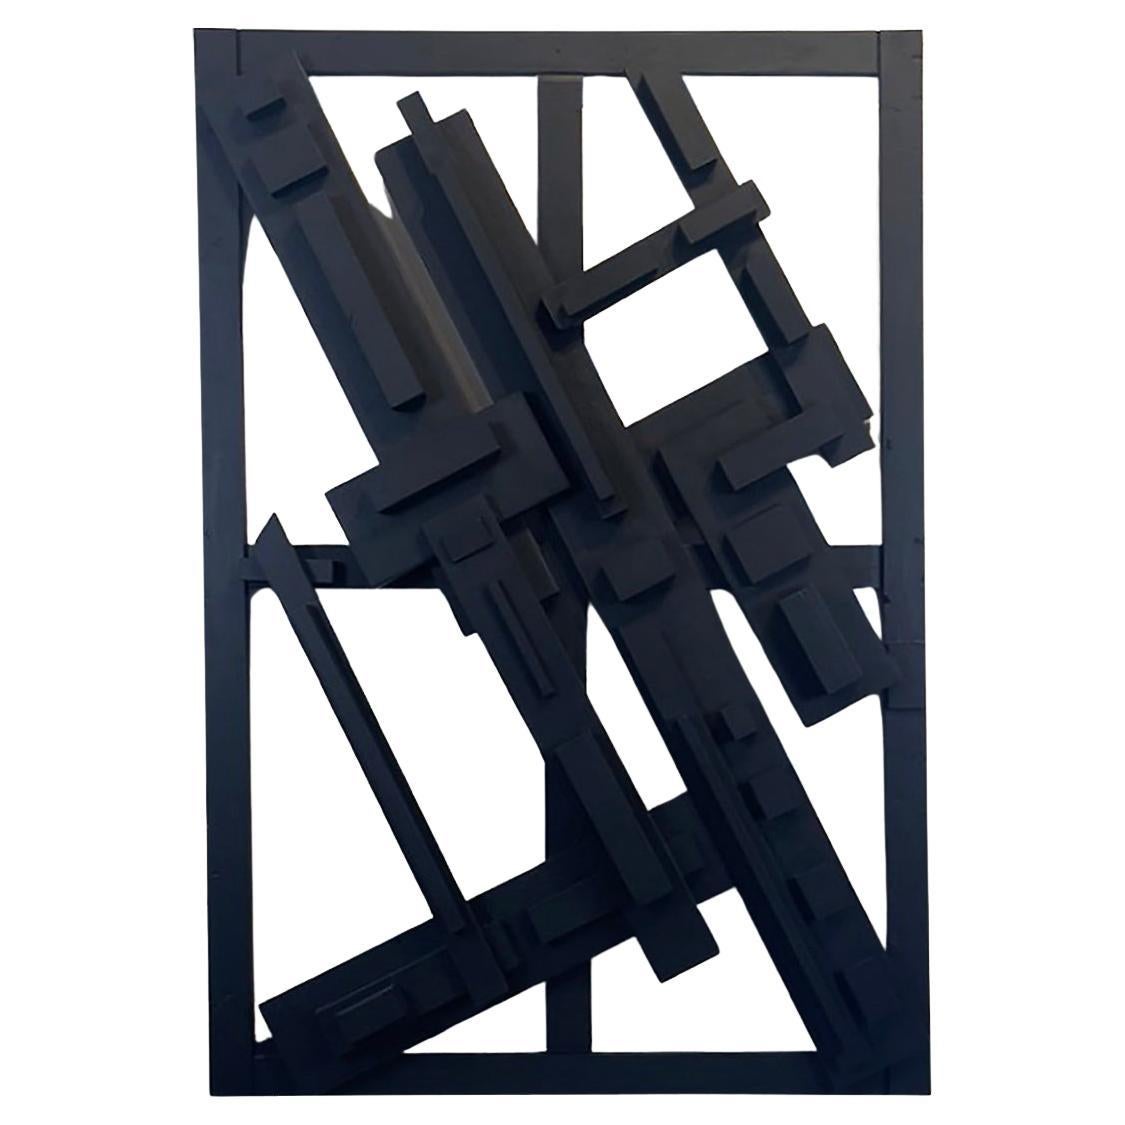 Skyline 31 de Jordan Tabachnik, compositions abstraites, brutaliste, sculpture